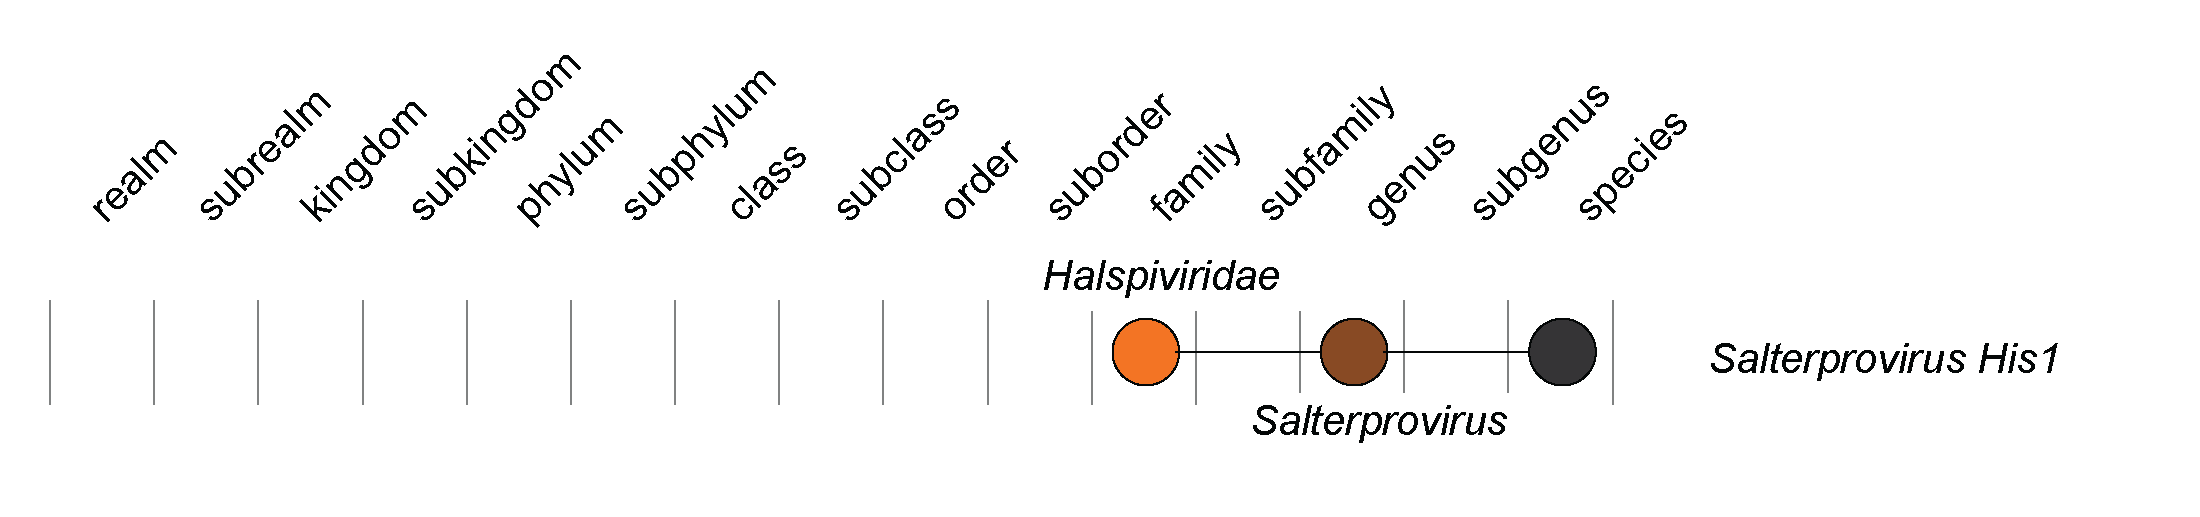 Halspiviridae taxonomy